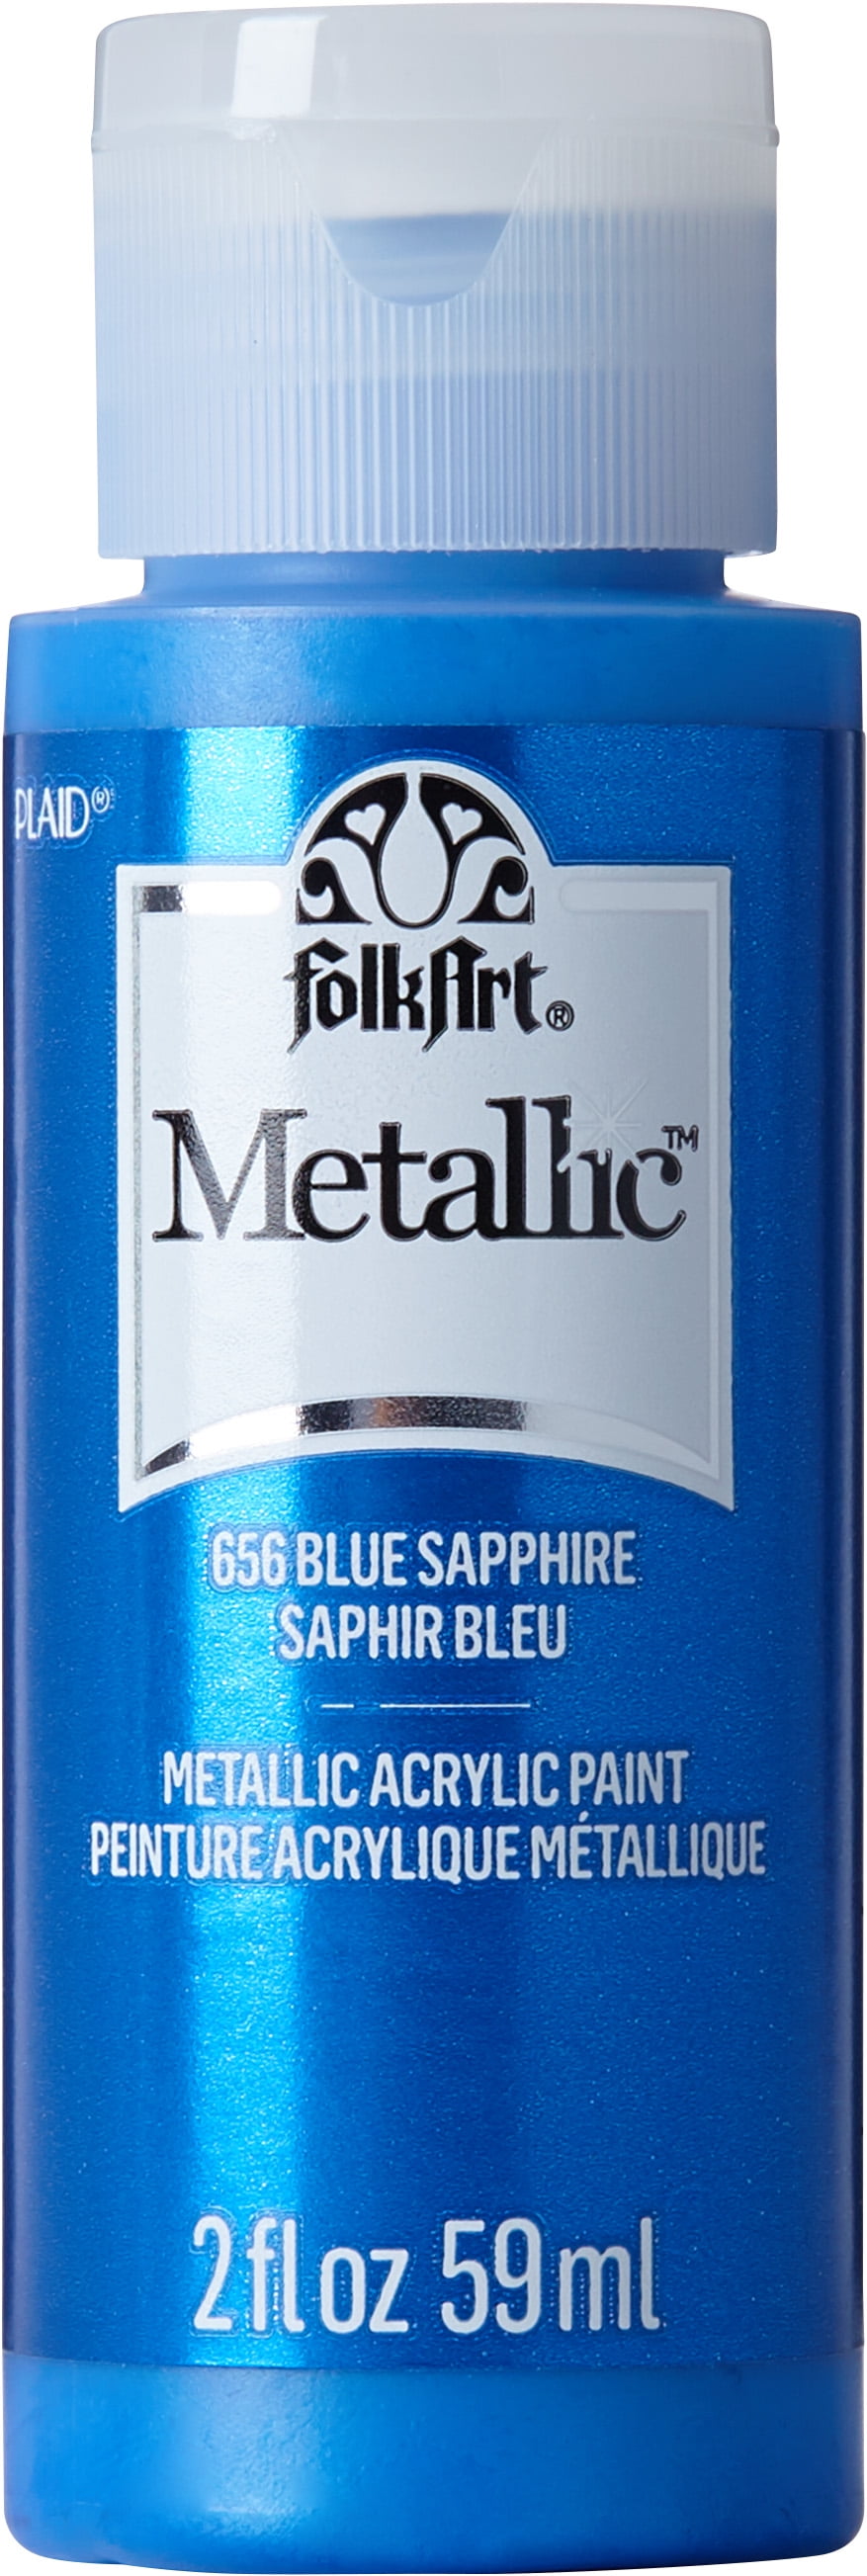 FolkArt Acrylic Metallic Paint, 2 Fl Oz (Pack of 1), Sequin Black